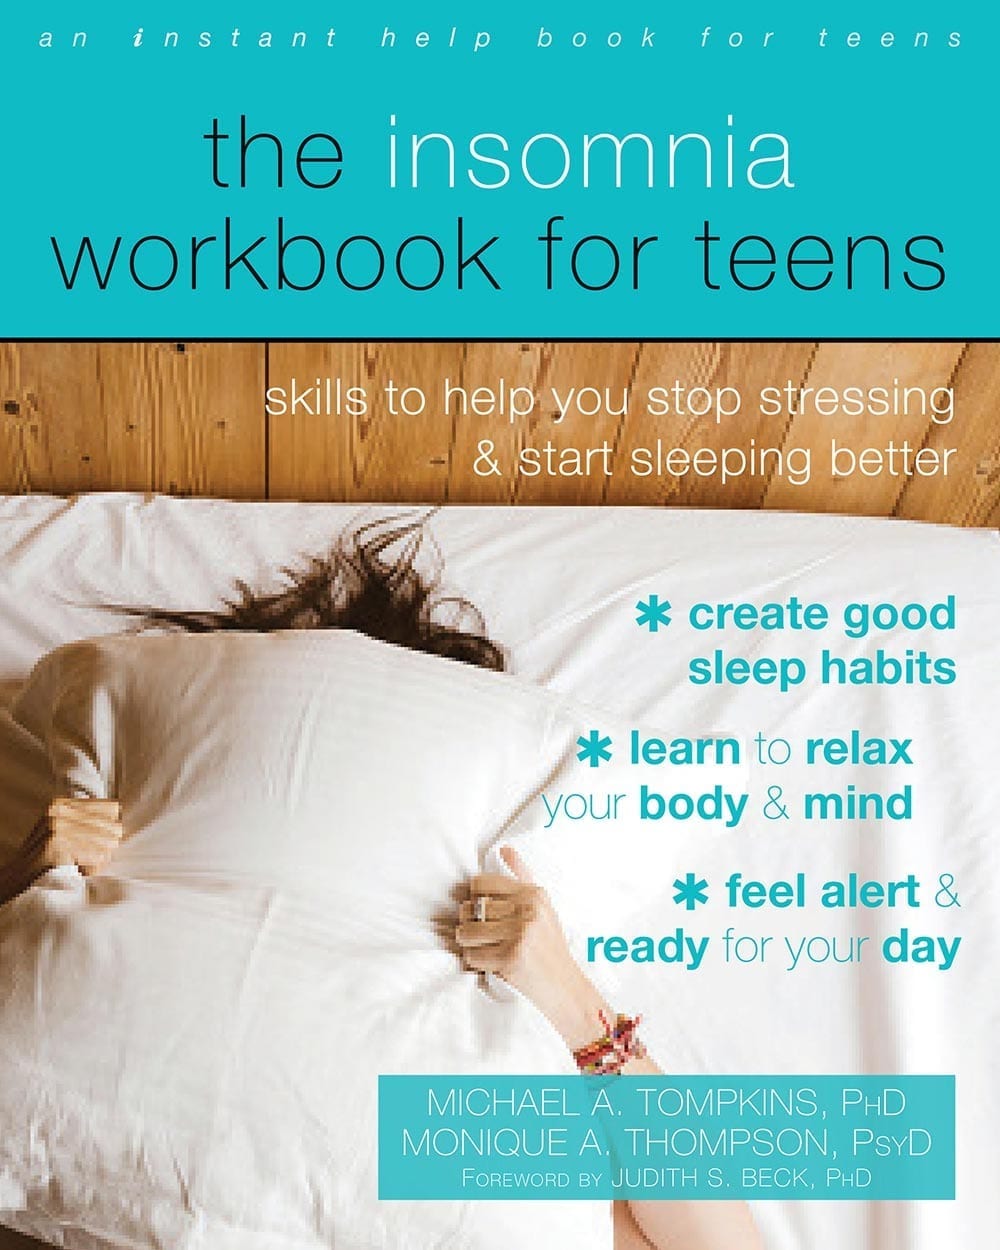 sleep deprivation effects on teenagers